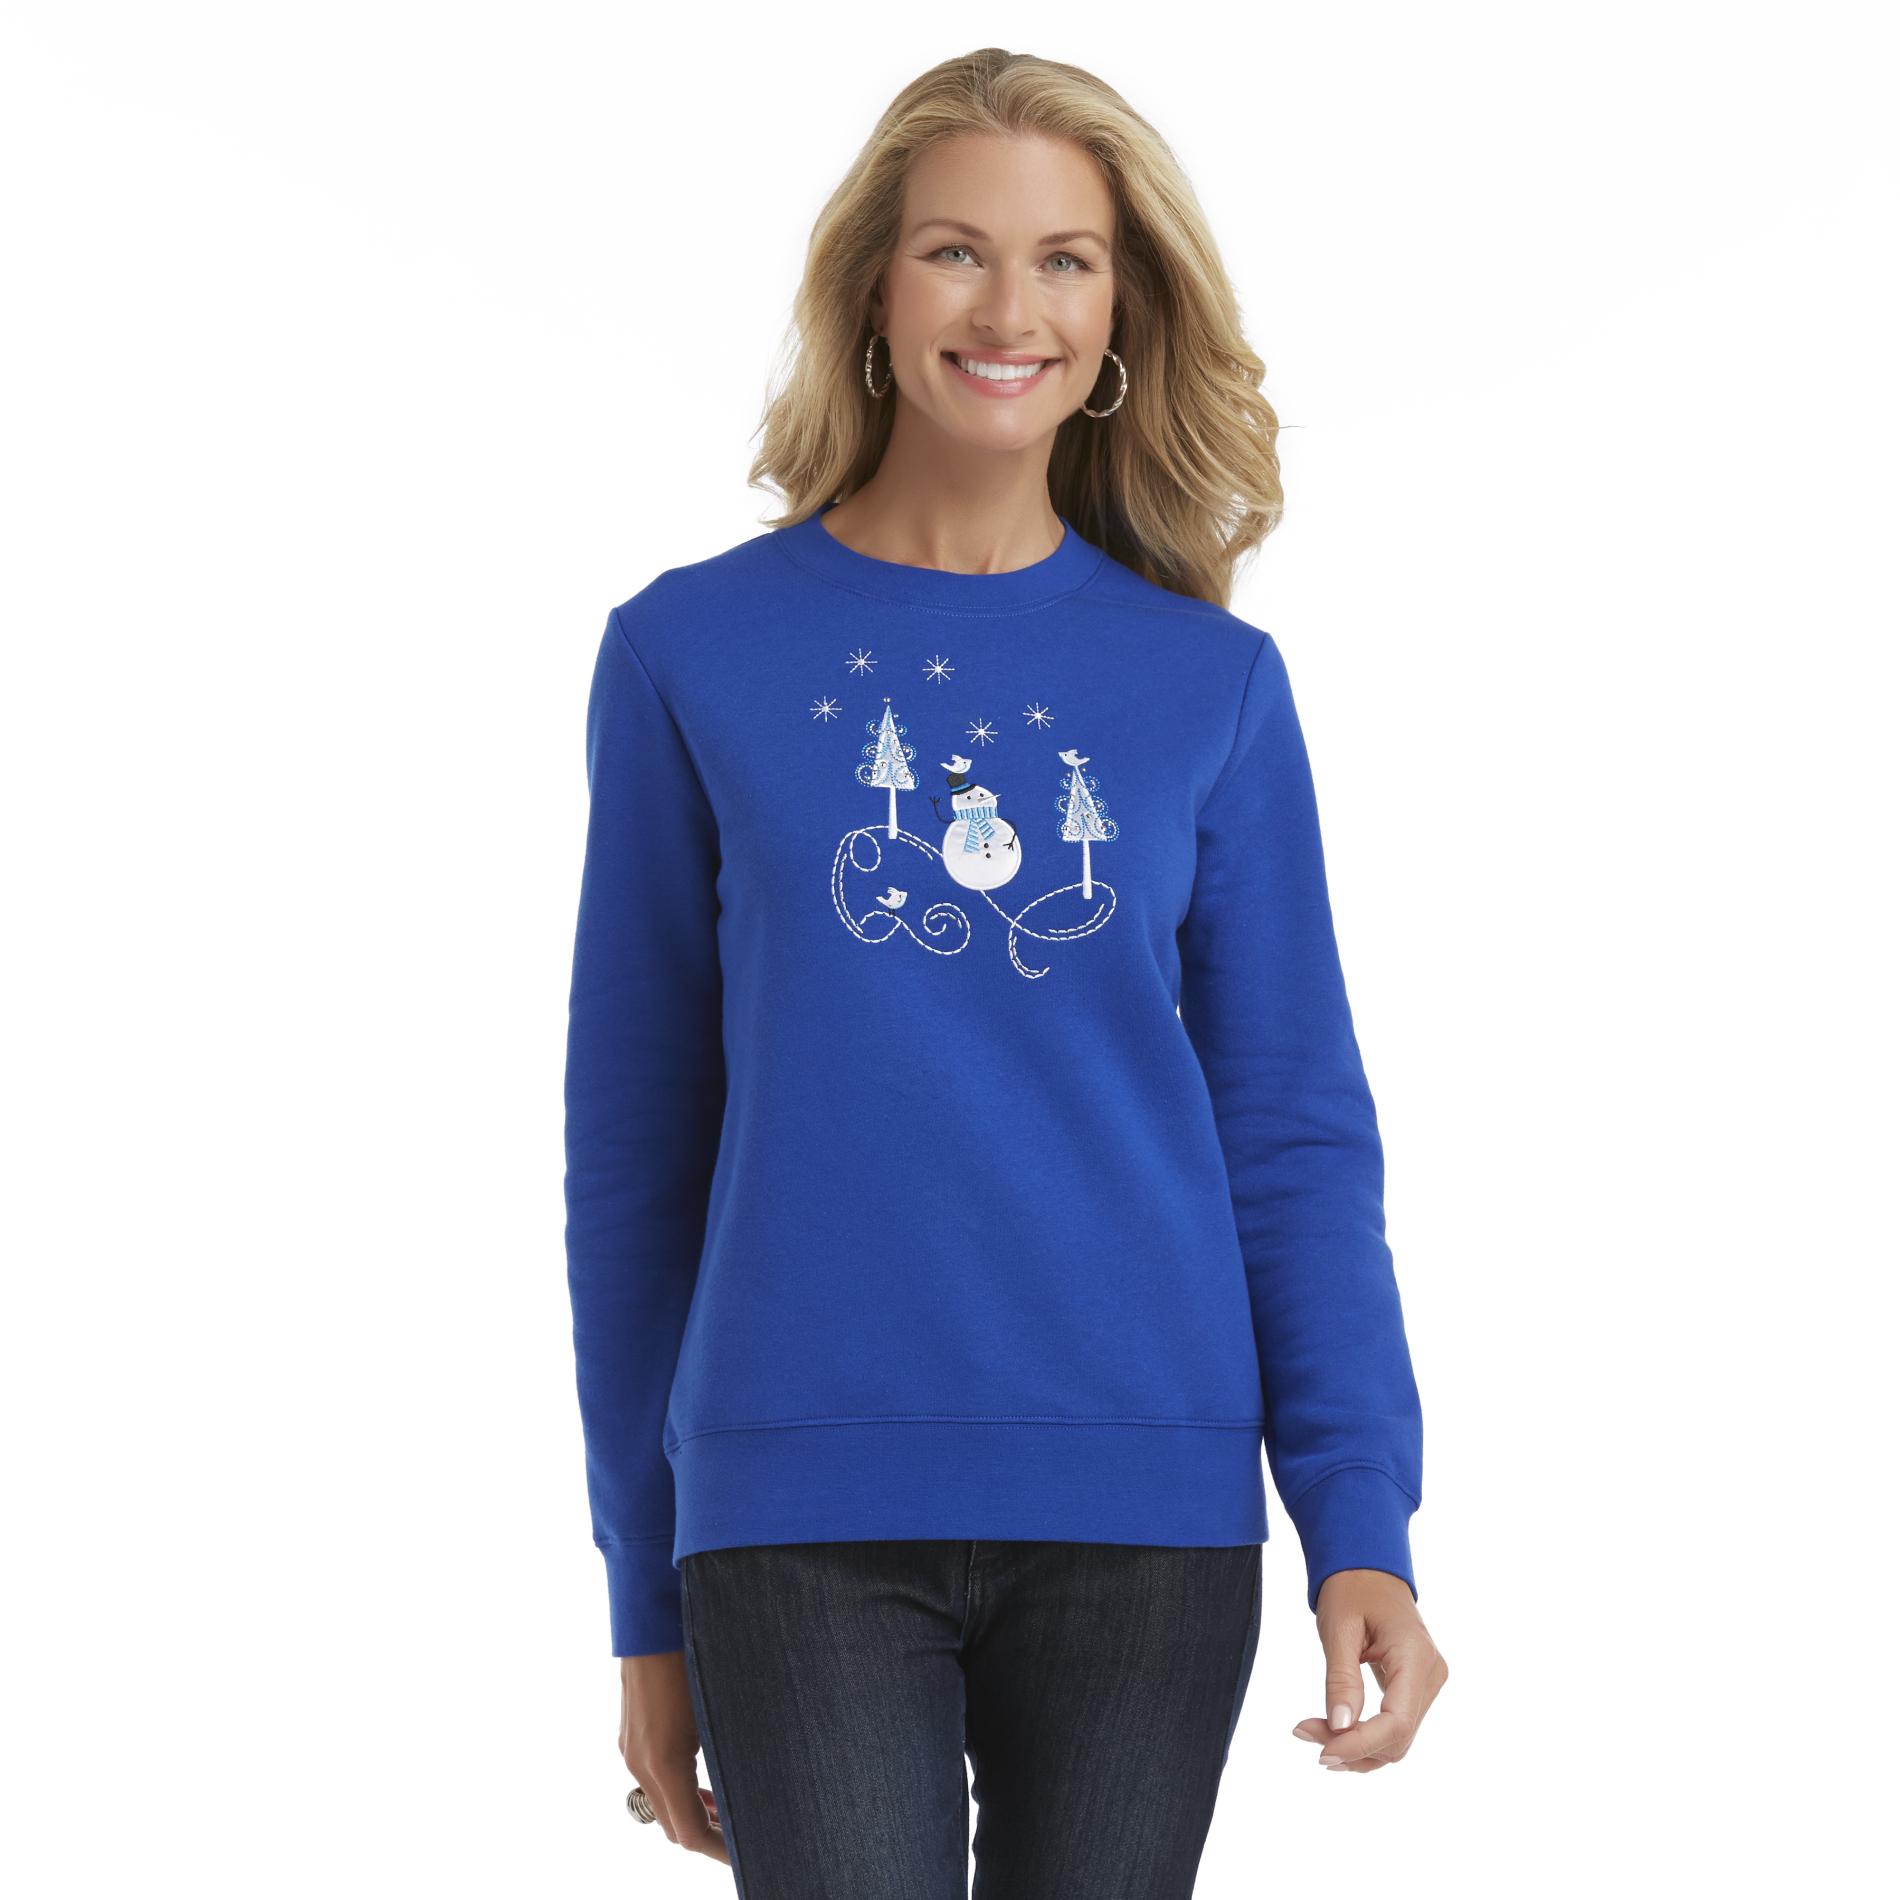 Holiday Editions Women's Christmas Fleece Sweatshirt - Snowman